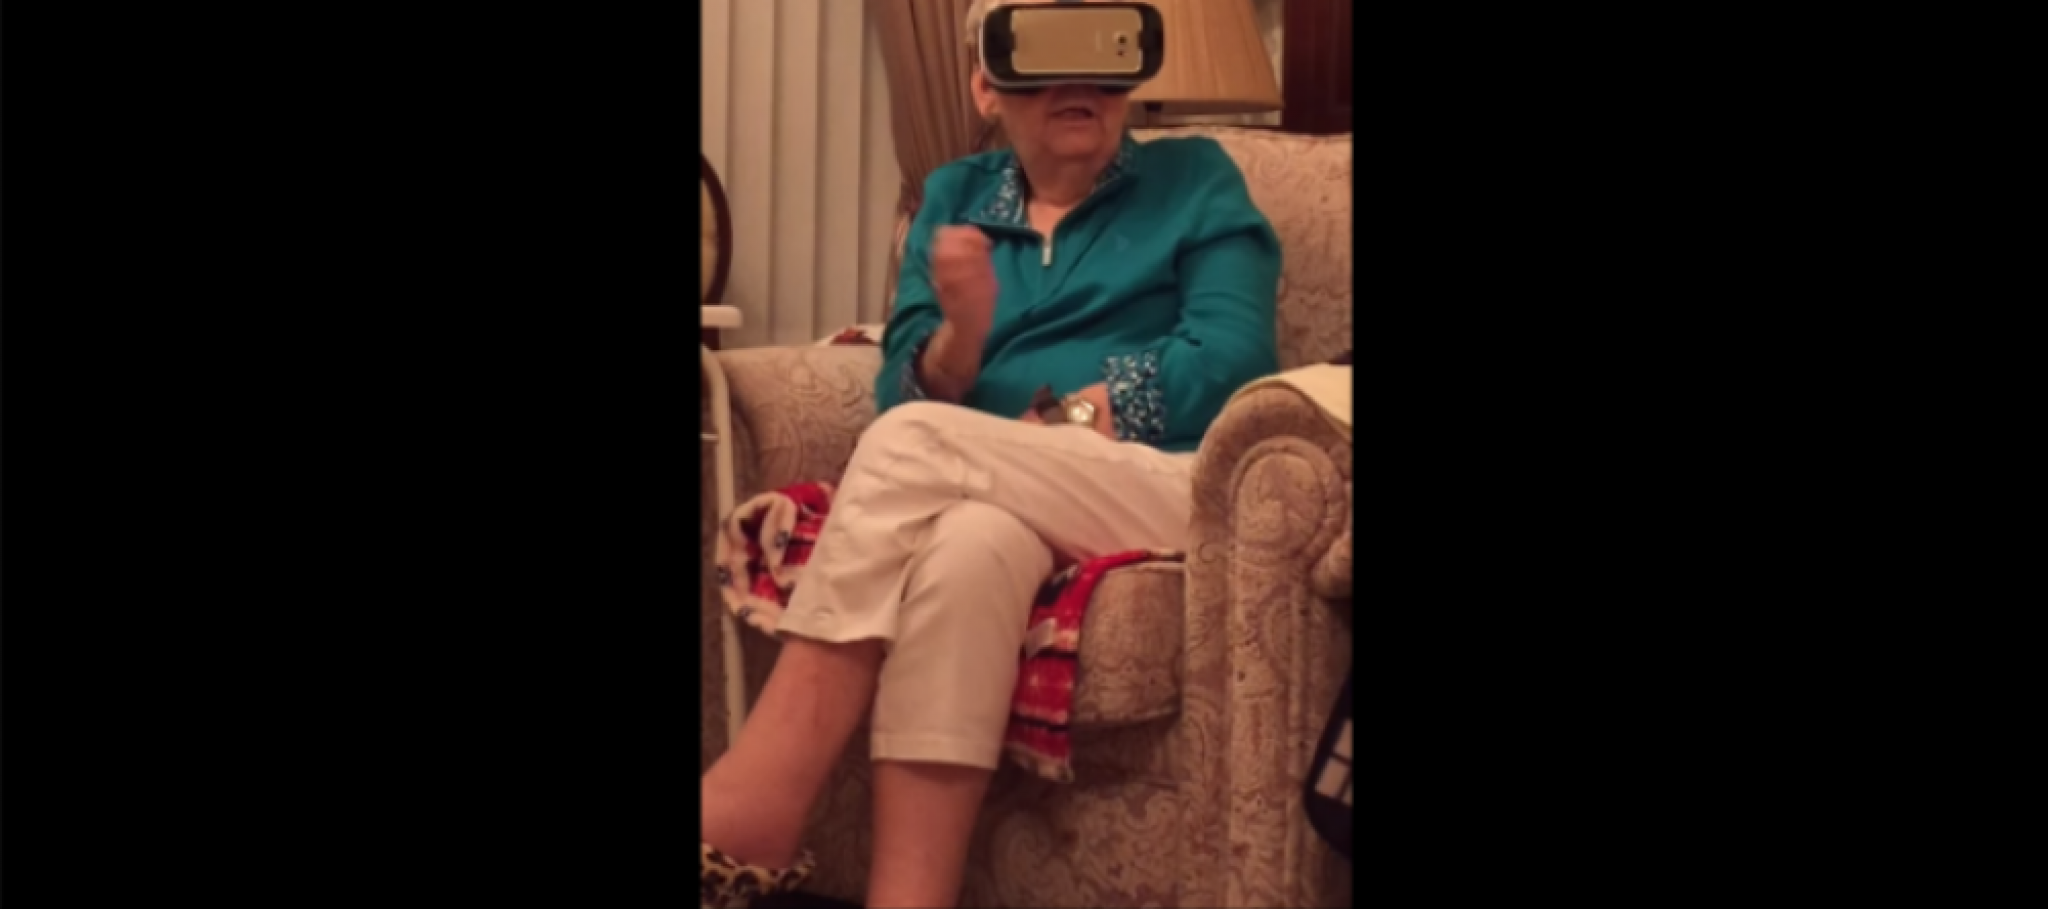 baka, virtualna stvarnost, virtual